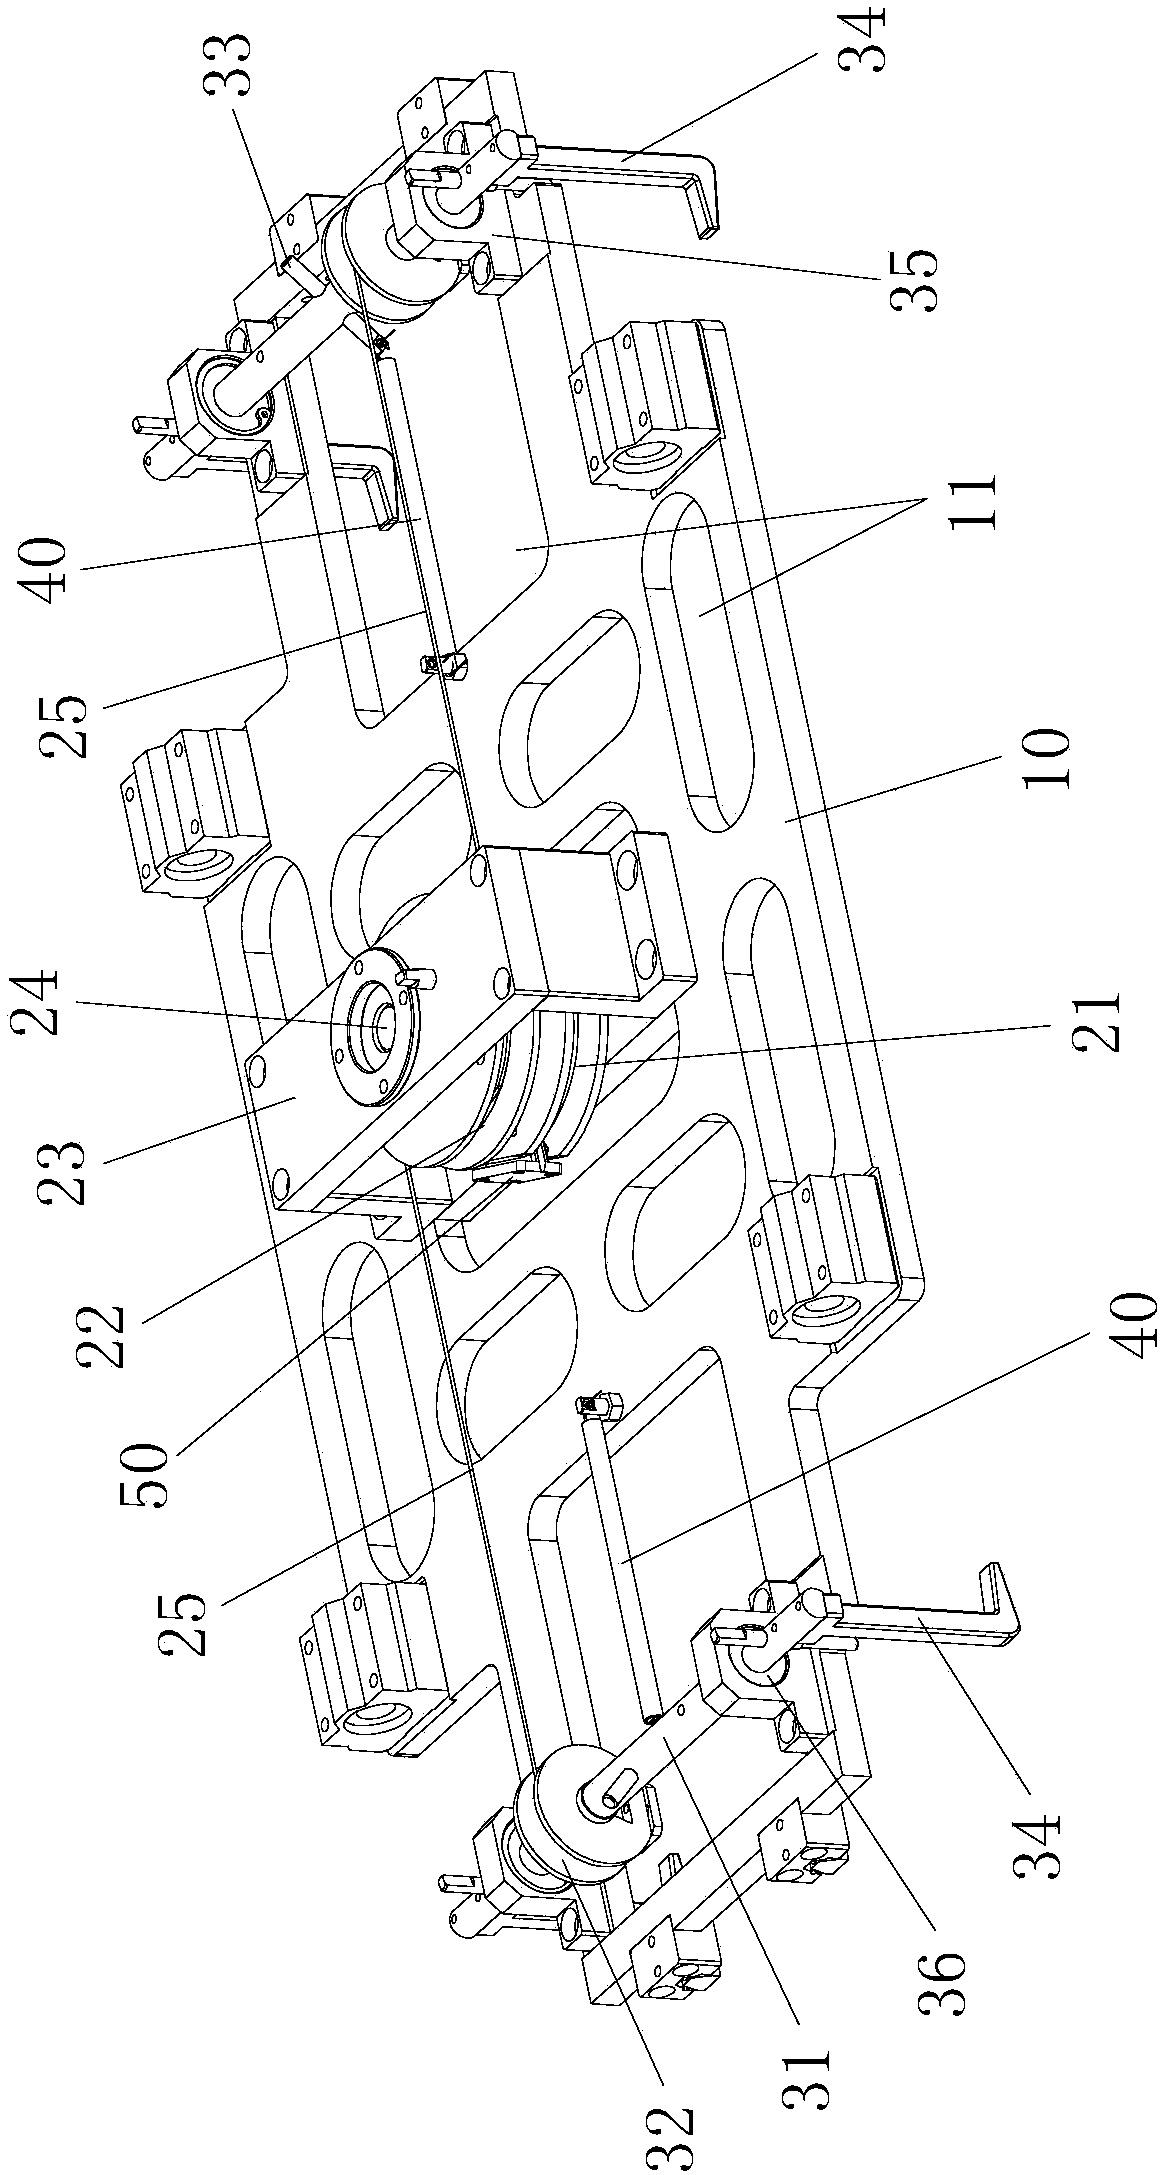 High-temperature-resistant clamping mechanism